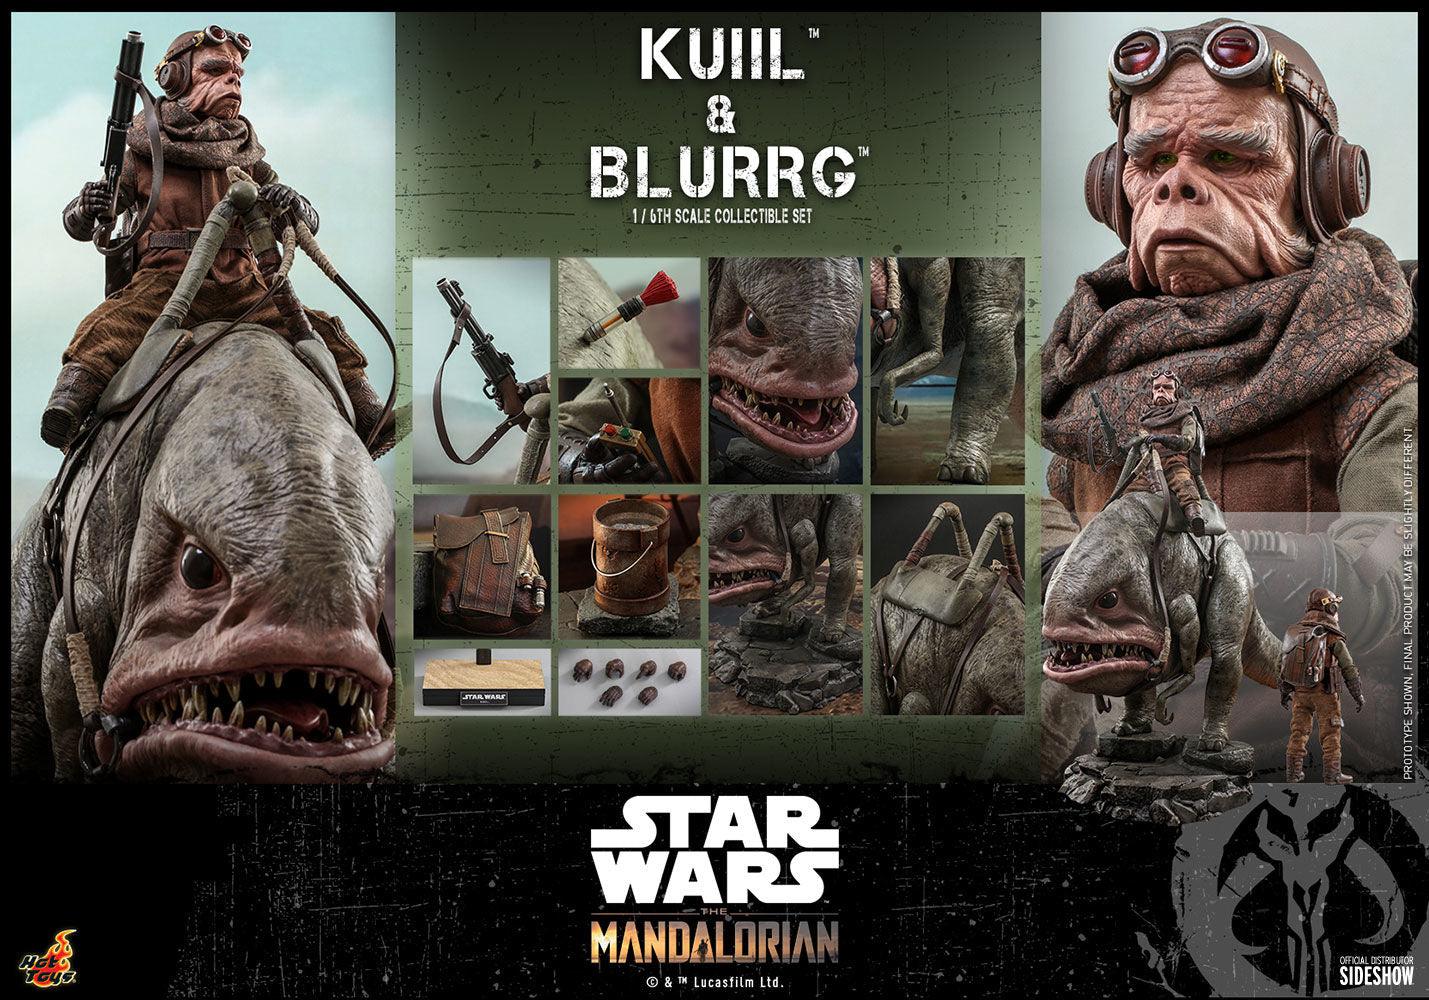 HOTTMS049 Star Wars: Mandalorian - Kuiil & Blurrg 1:6 Scale Action Figure - Hot Toys - Titan Pop Culture